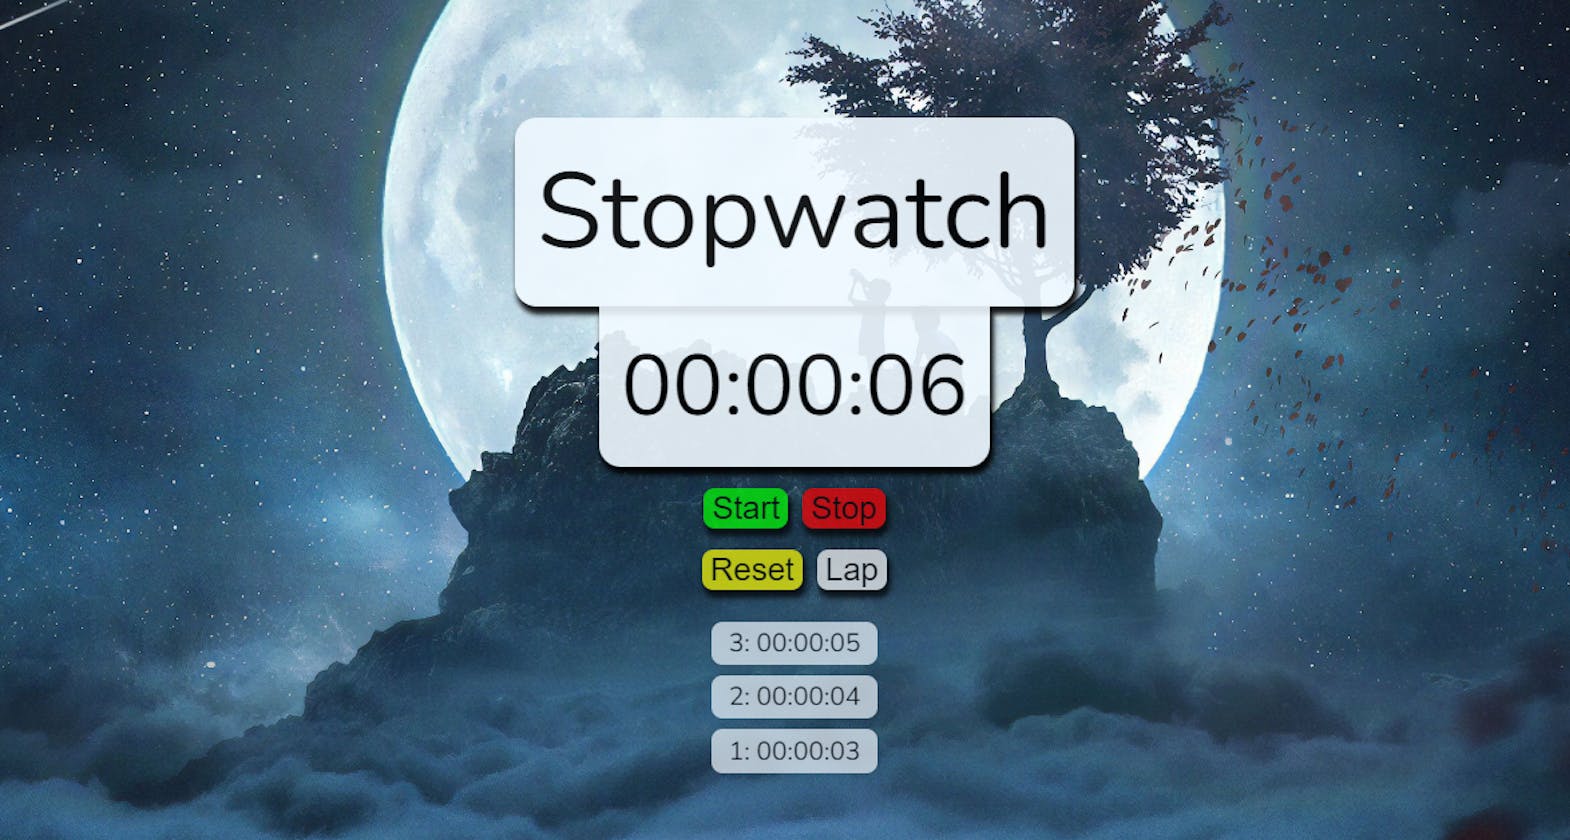 Stopwatch using JavaScript